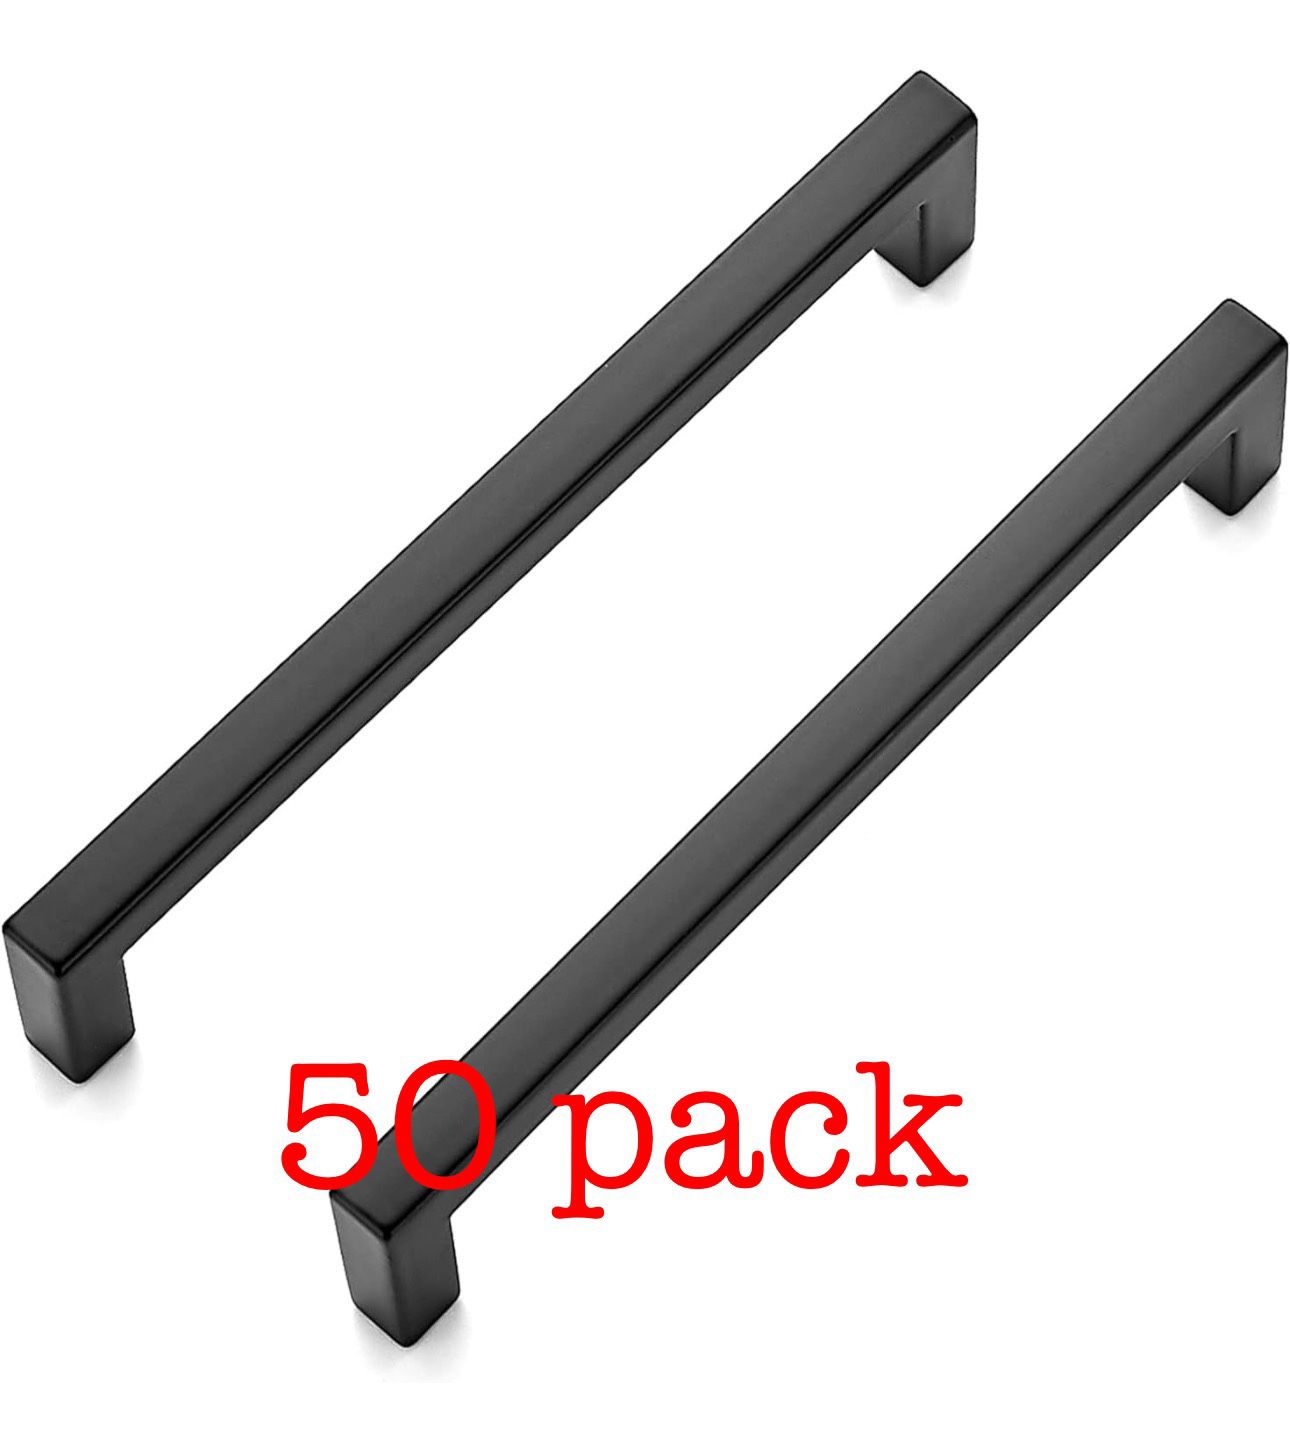 50 pack drawer handle